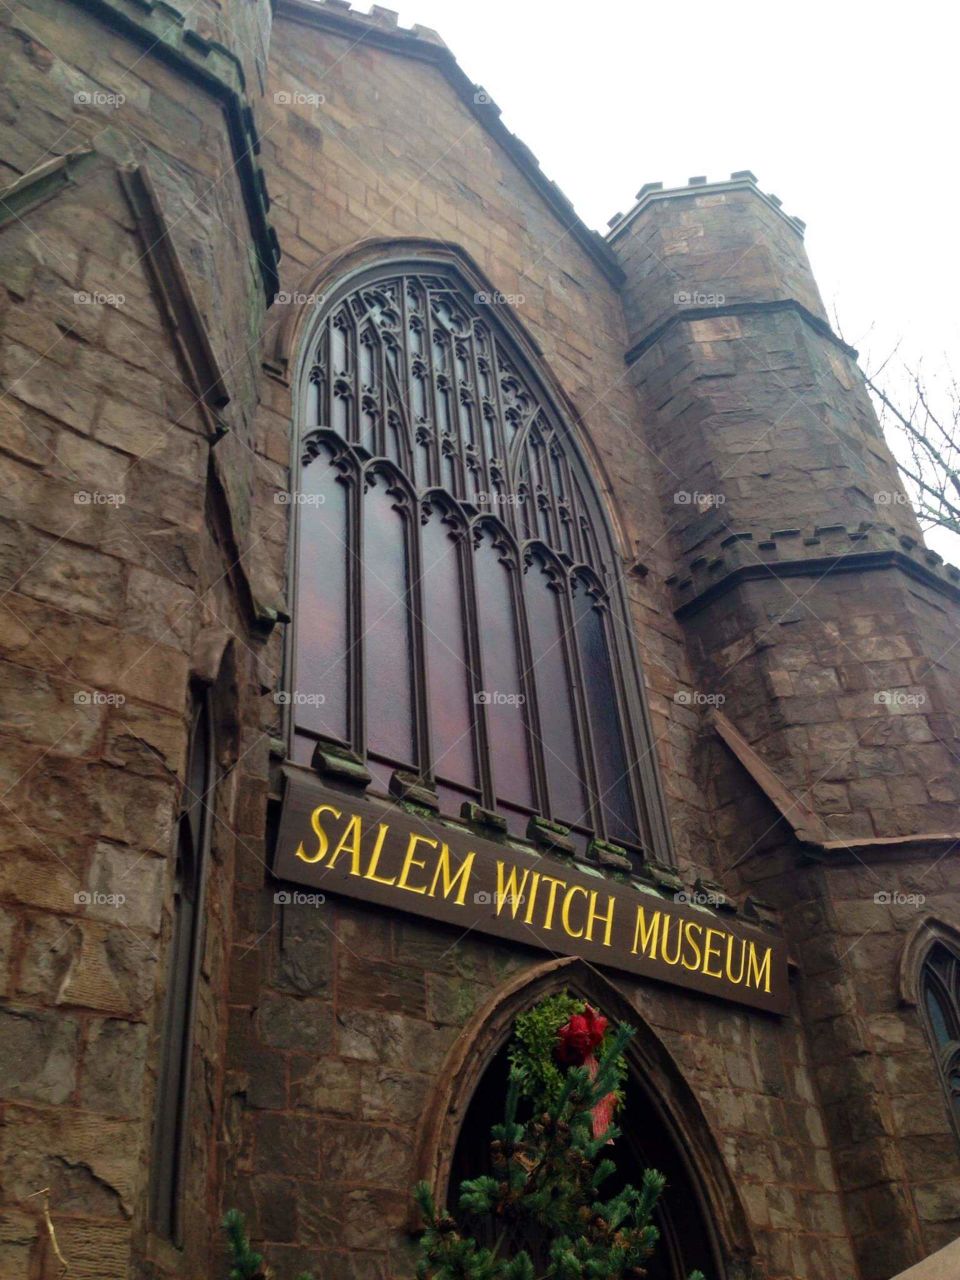 Salem witch museum 